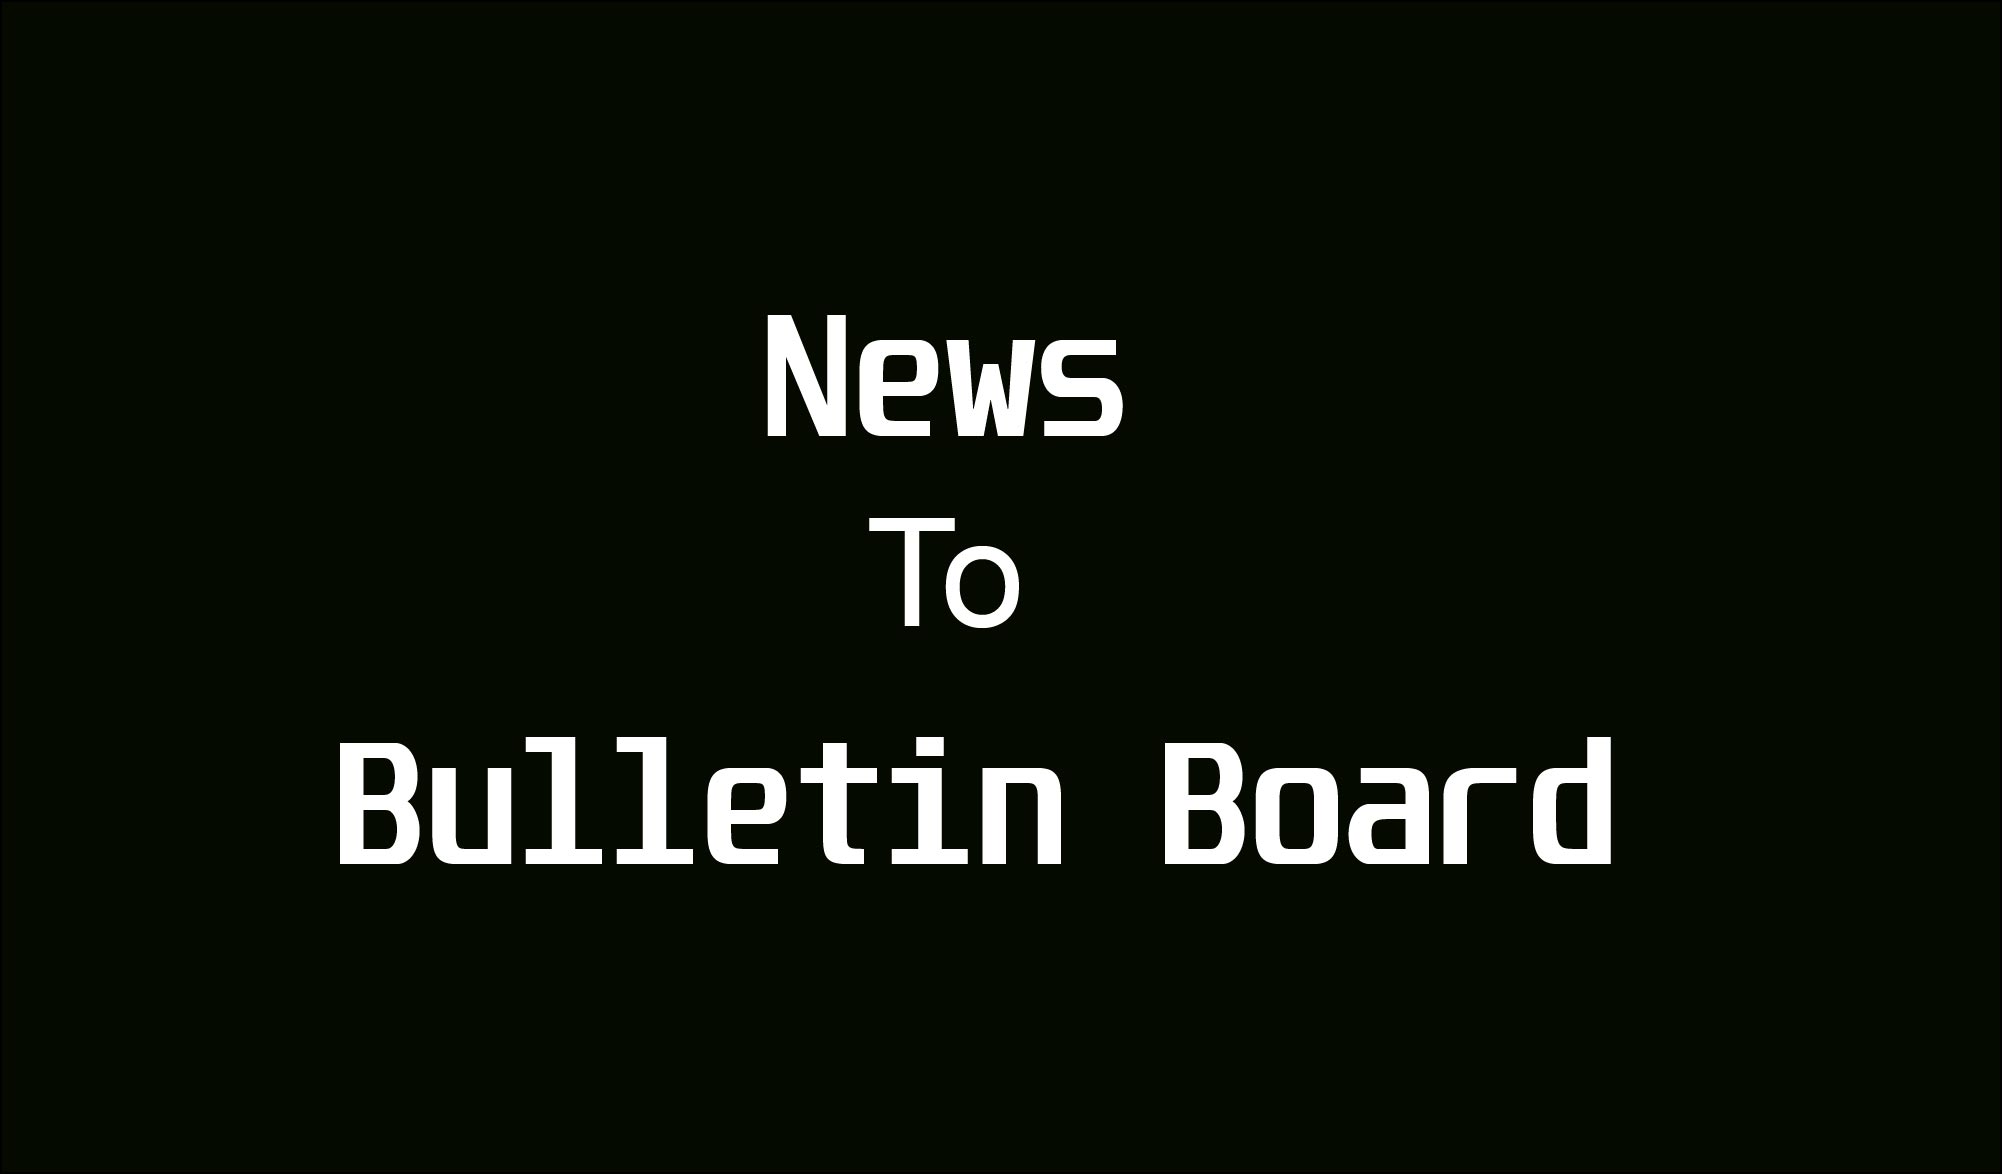 News To Bulletin Board